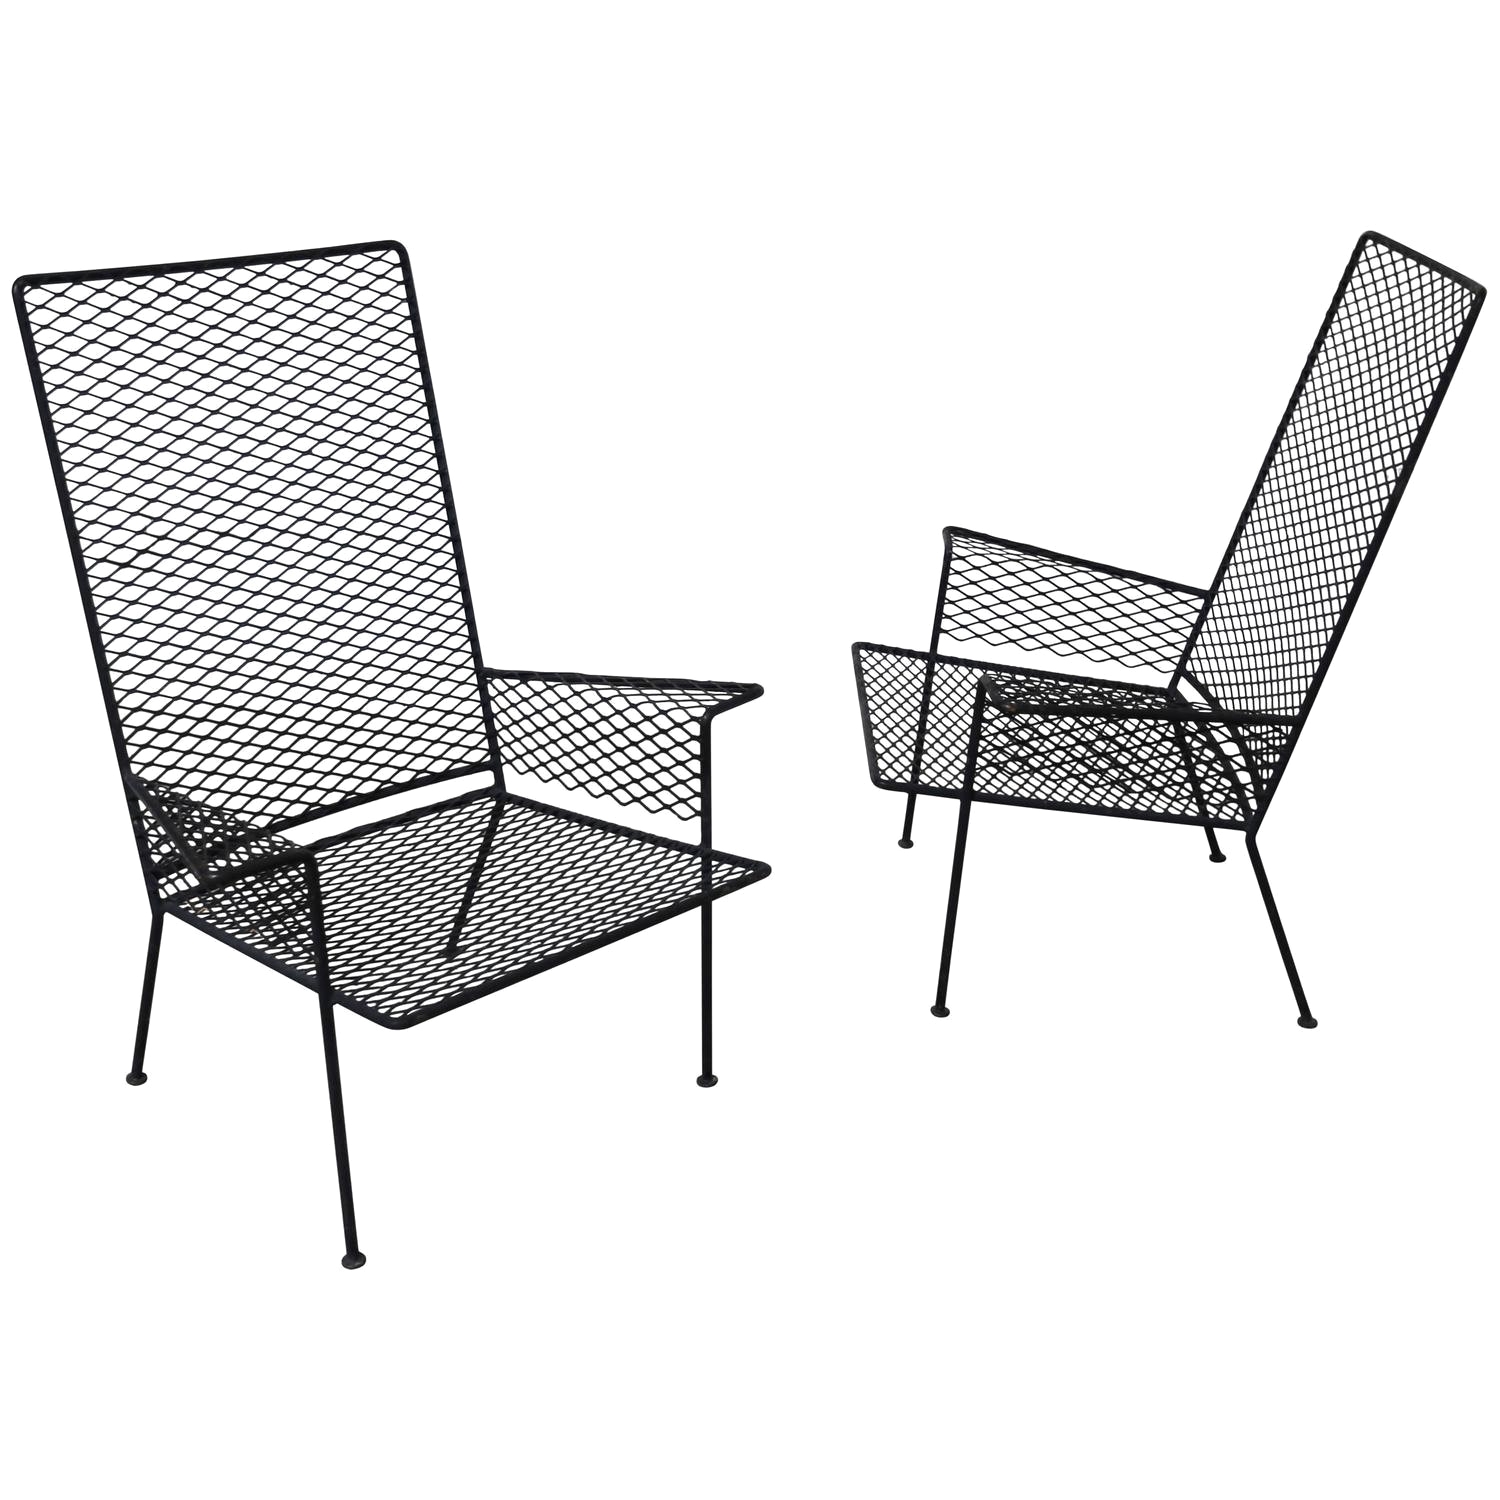 lawn chair fabric mesh metal mesh patio furniture new wicker outdoor sofa 0d patio chairs